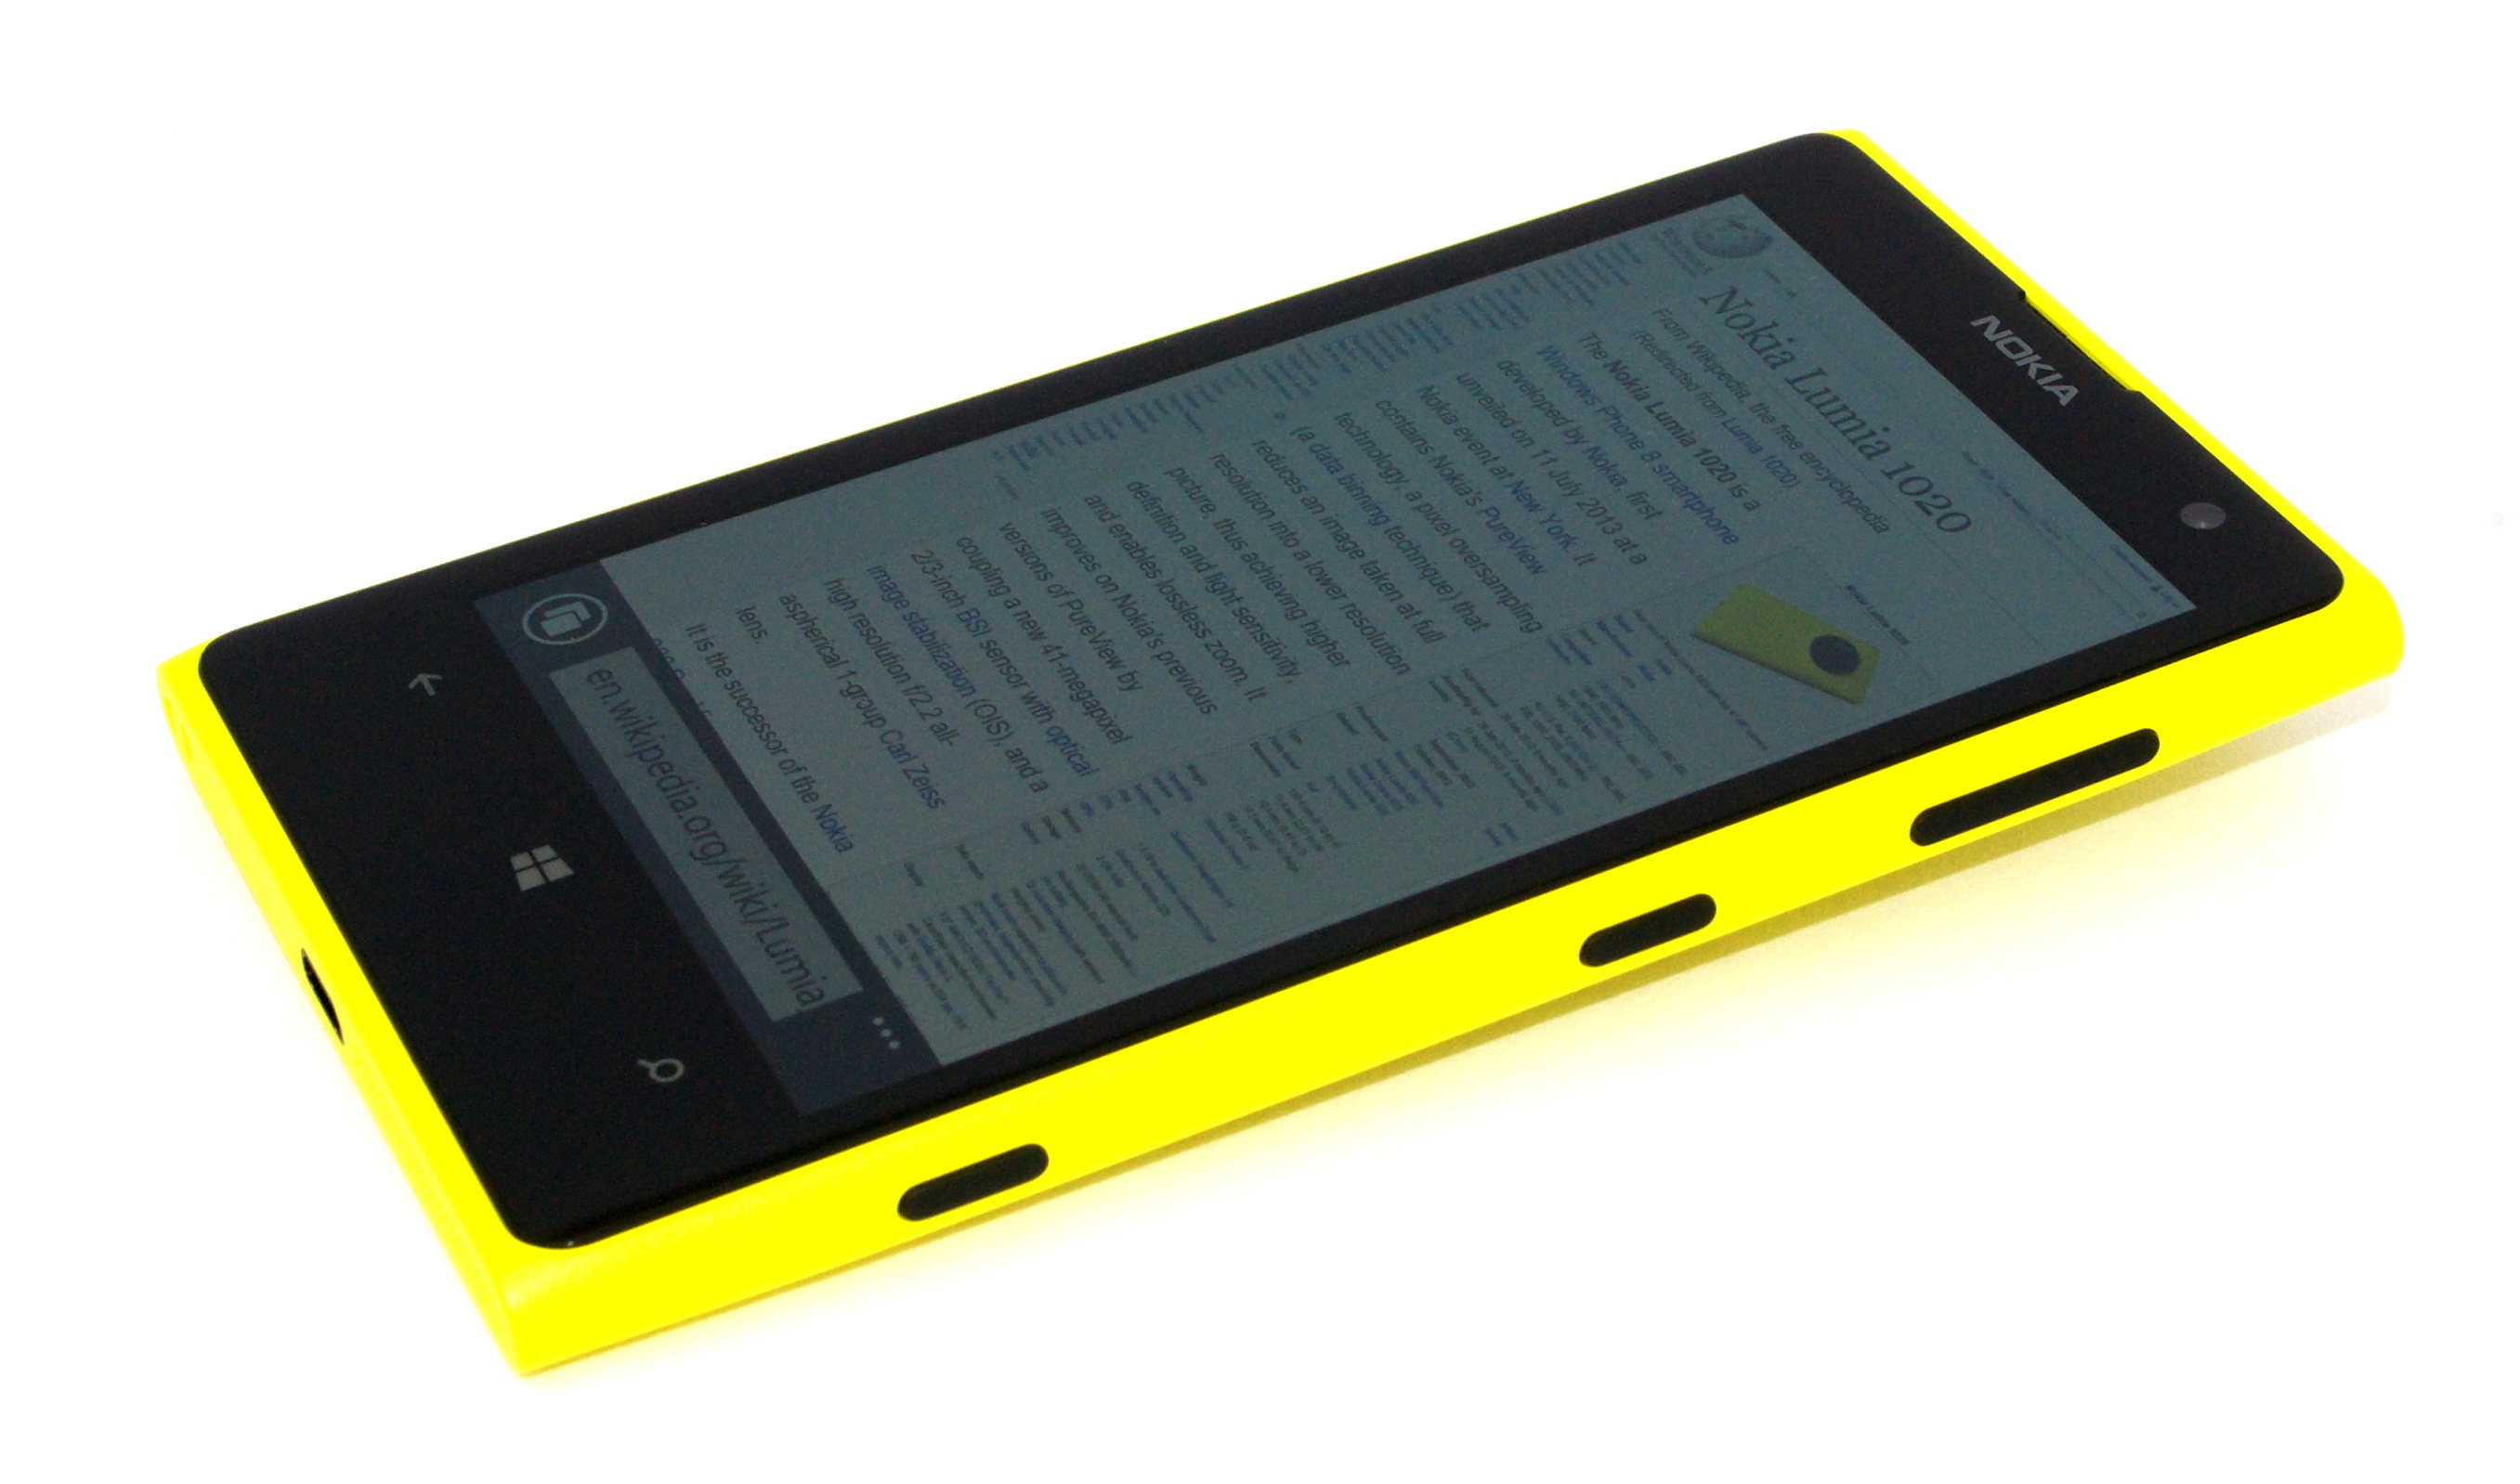 Metropcs Nokia Lumia 521 Unlock Code Free